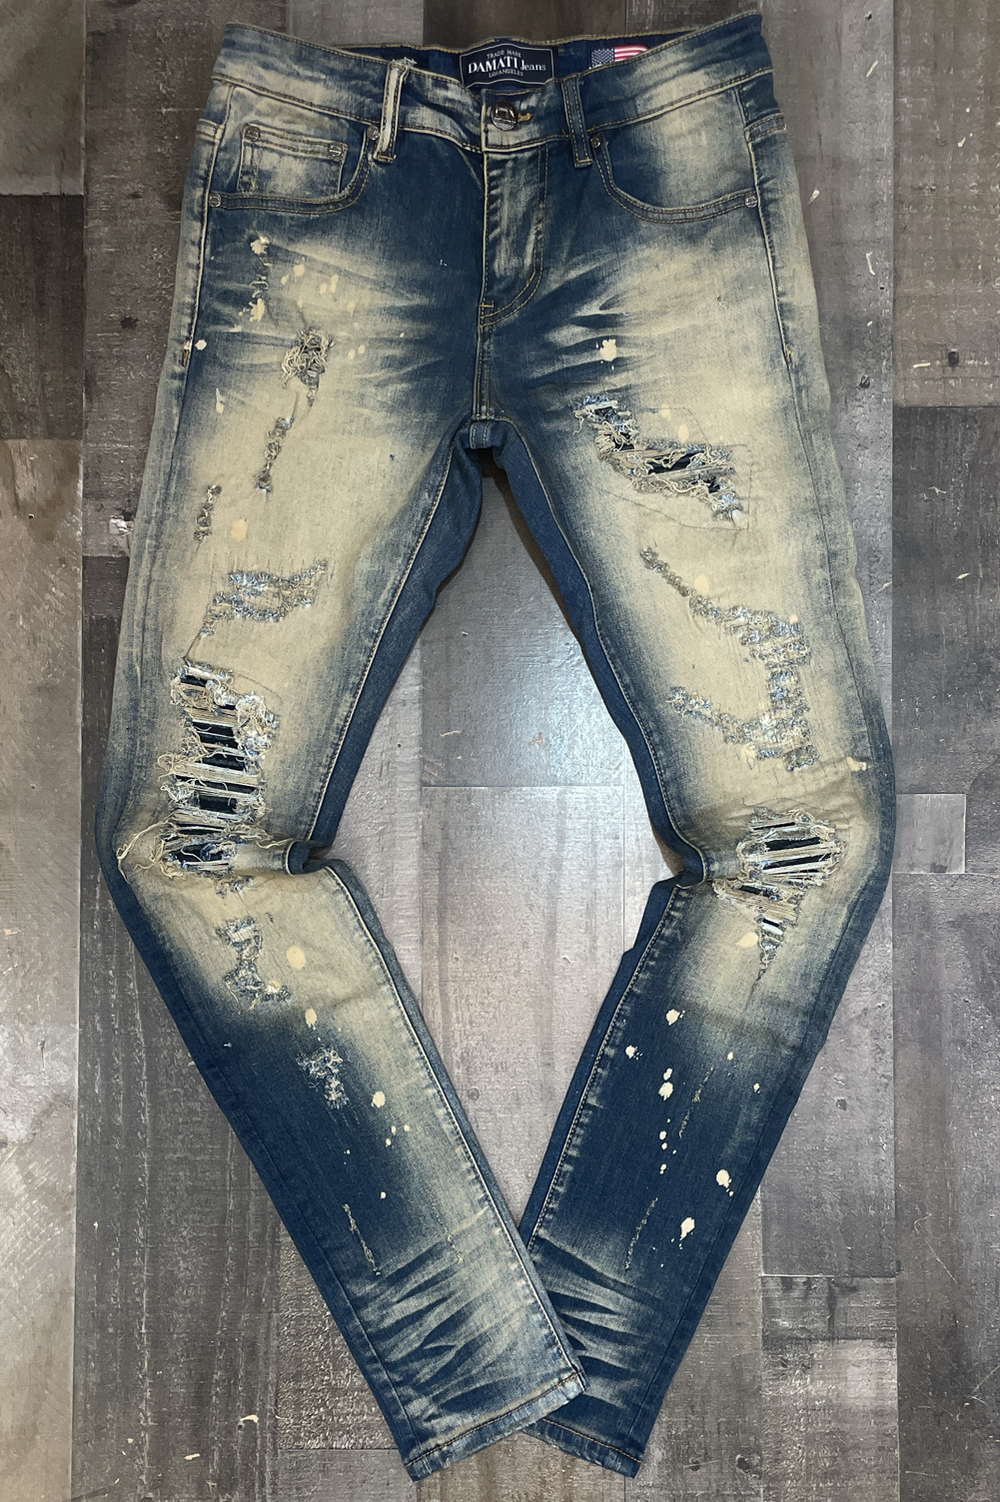 Damati - ripped denim jeans (vintage)